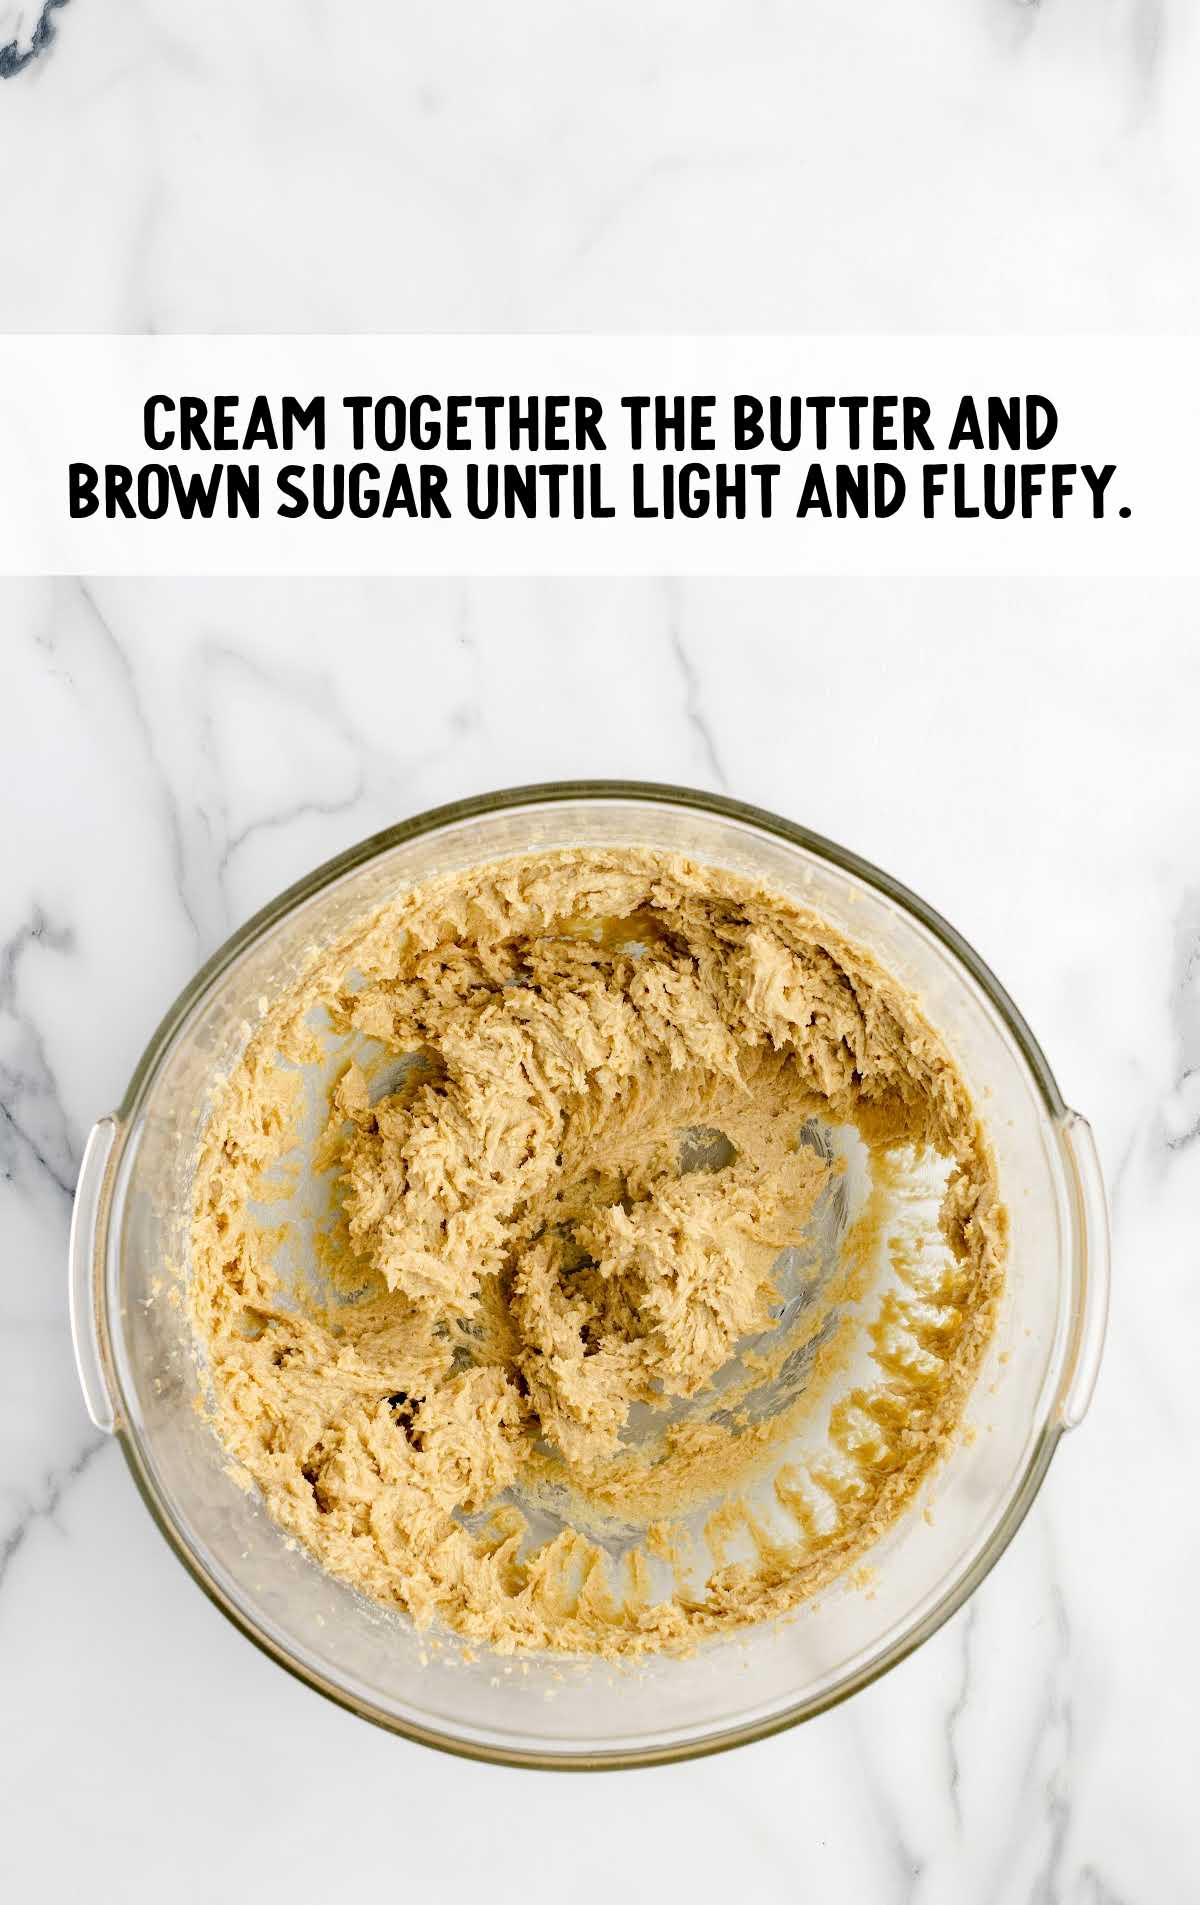 butter and brown sugar blended together until fluffy